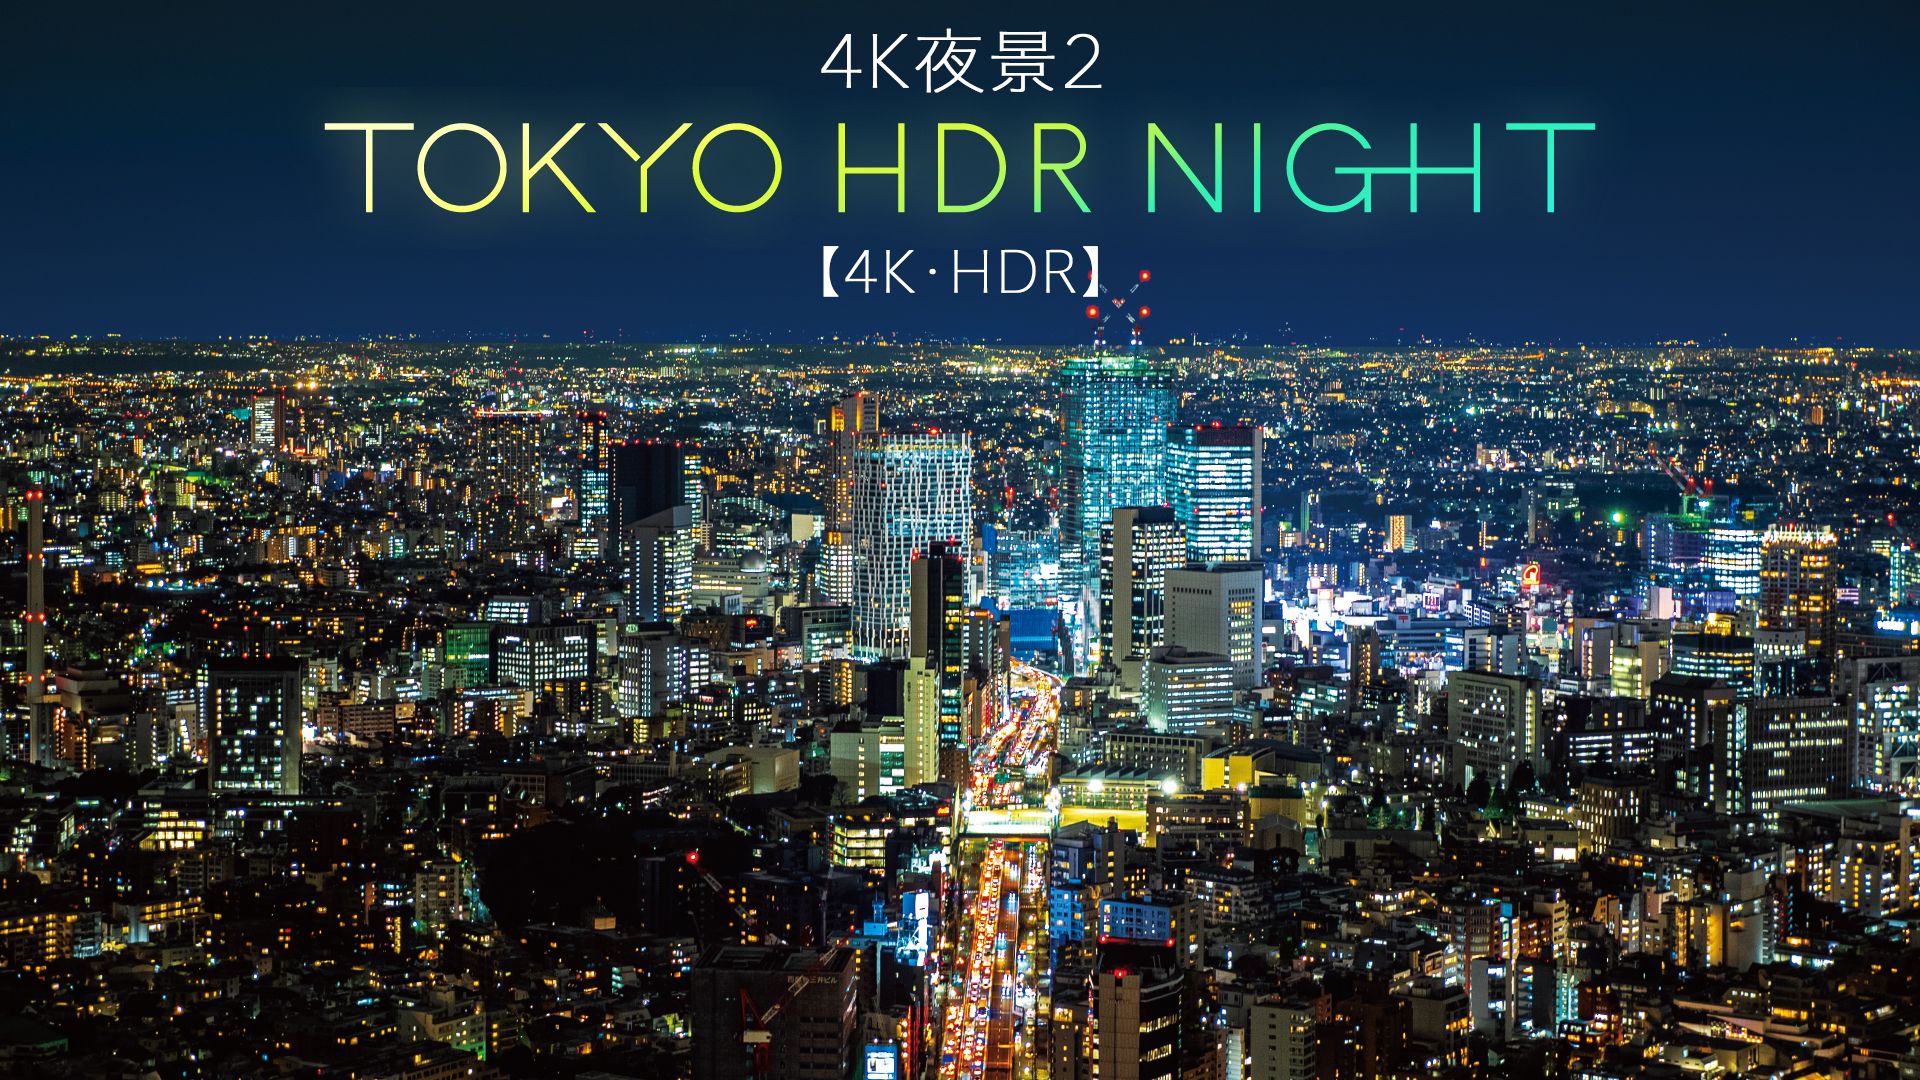 4k夜景2 Tokyo Hdr Night 4k Hdr の動画を配信しているサービス 動画作品を探すならaukana